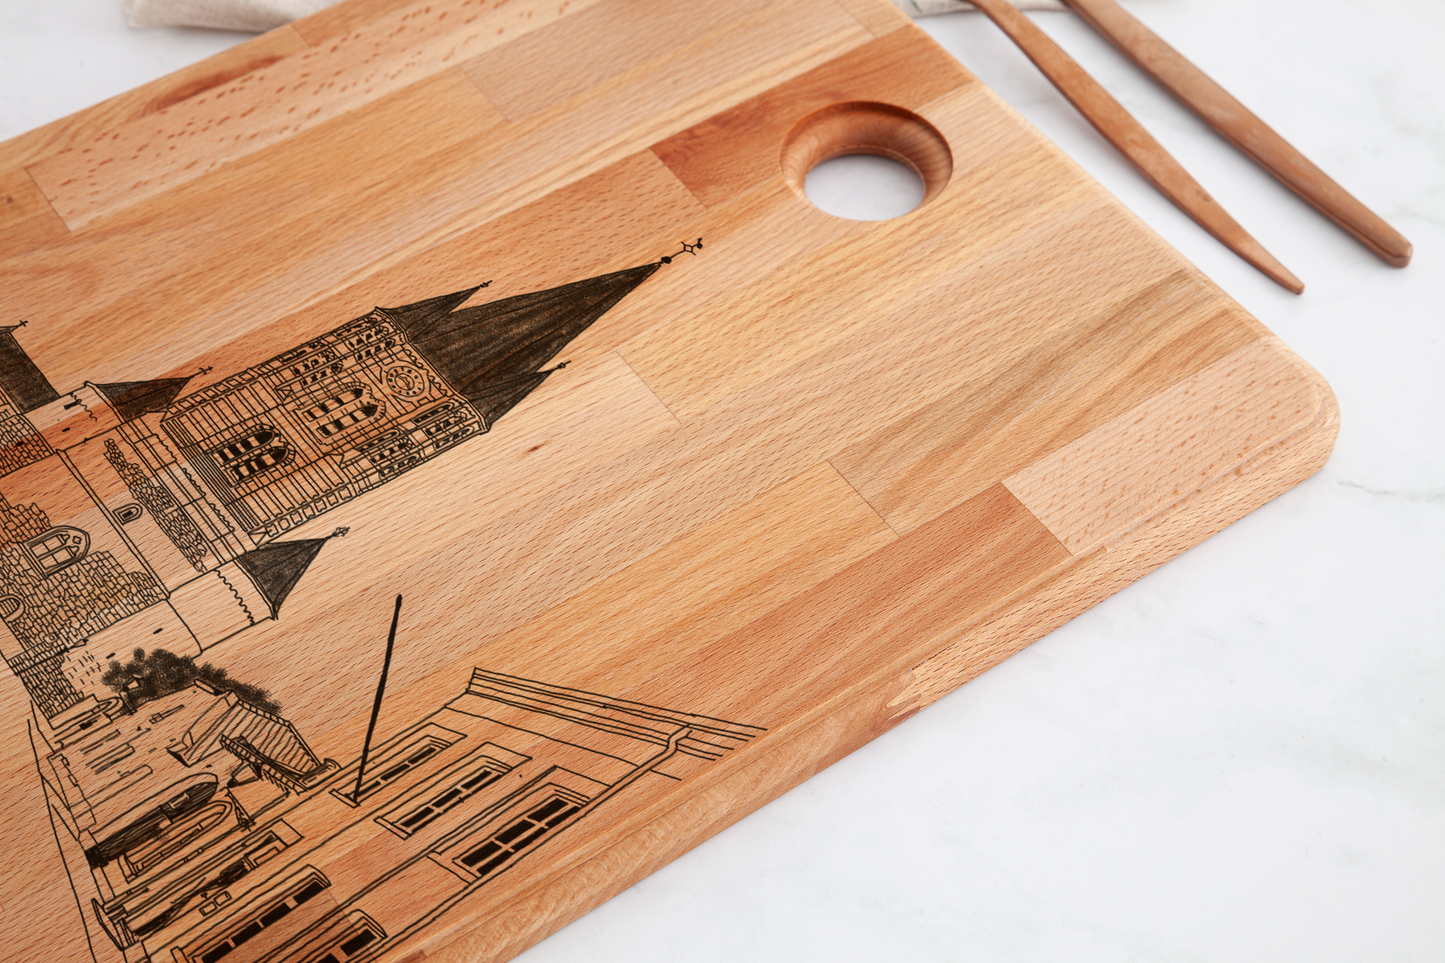 Thorn, Abdij Kerk, cutting board, wood grain